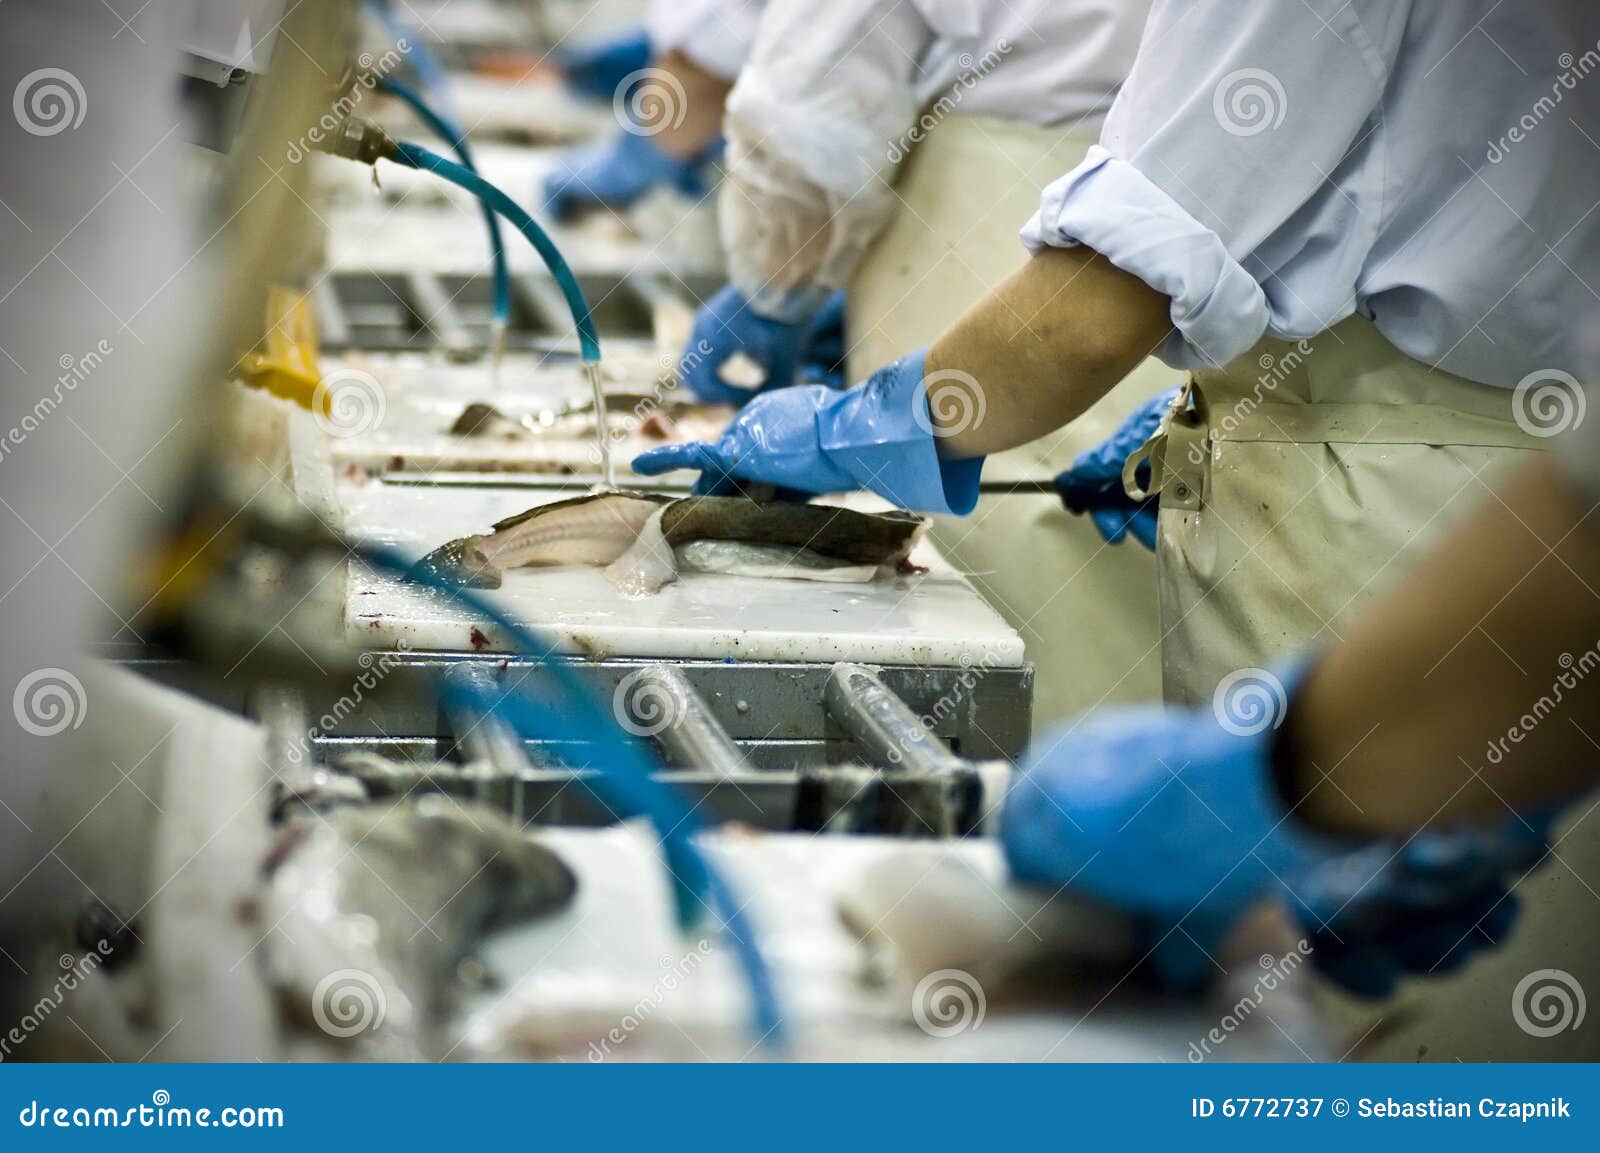 fish-processing-factory-6772737.jpg